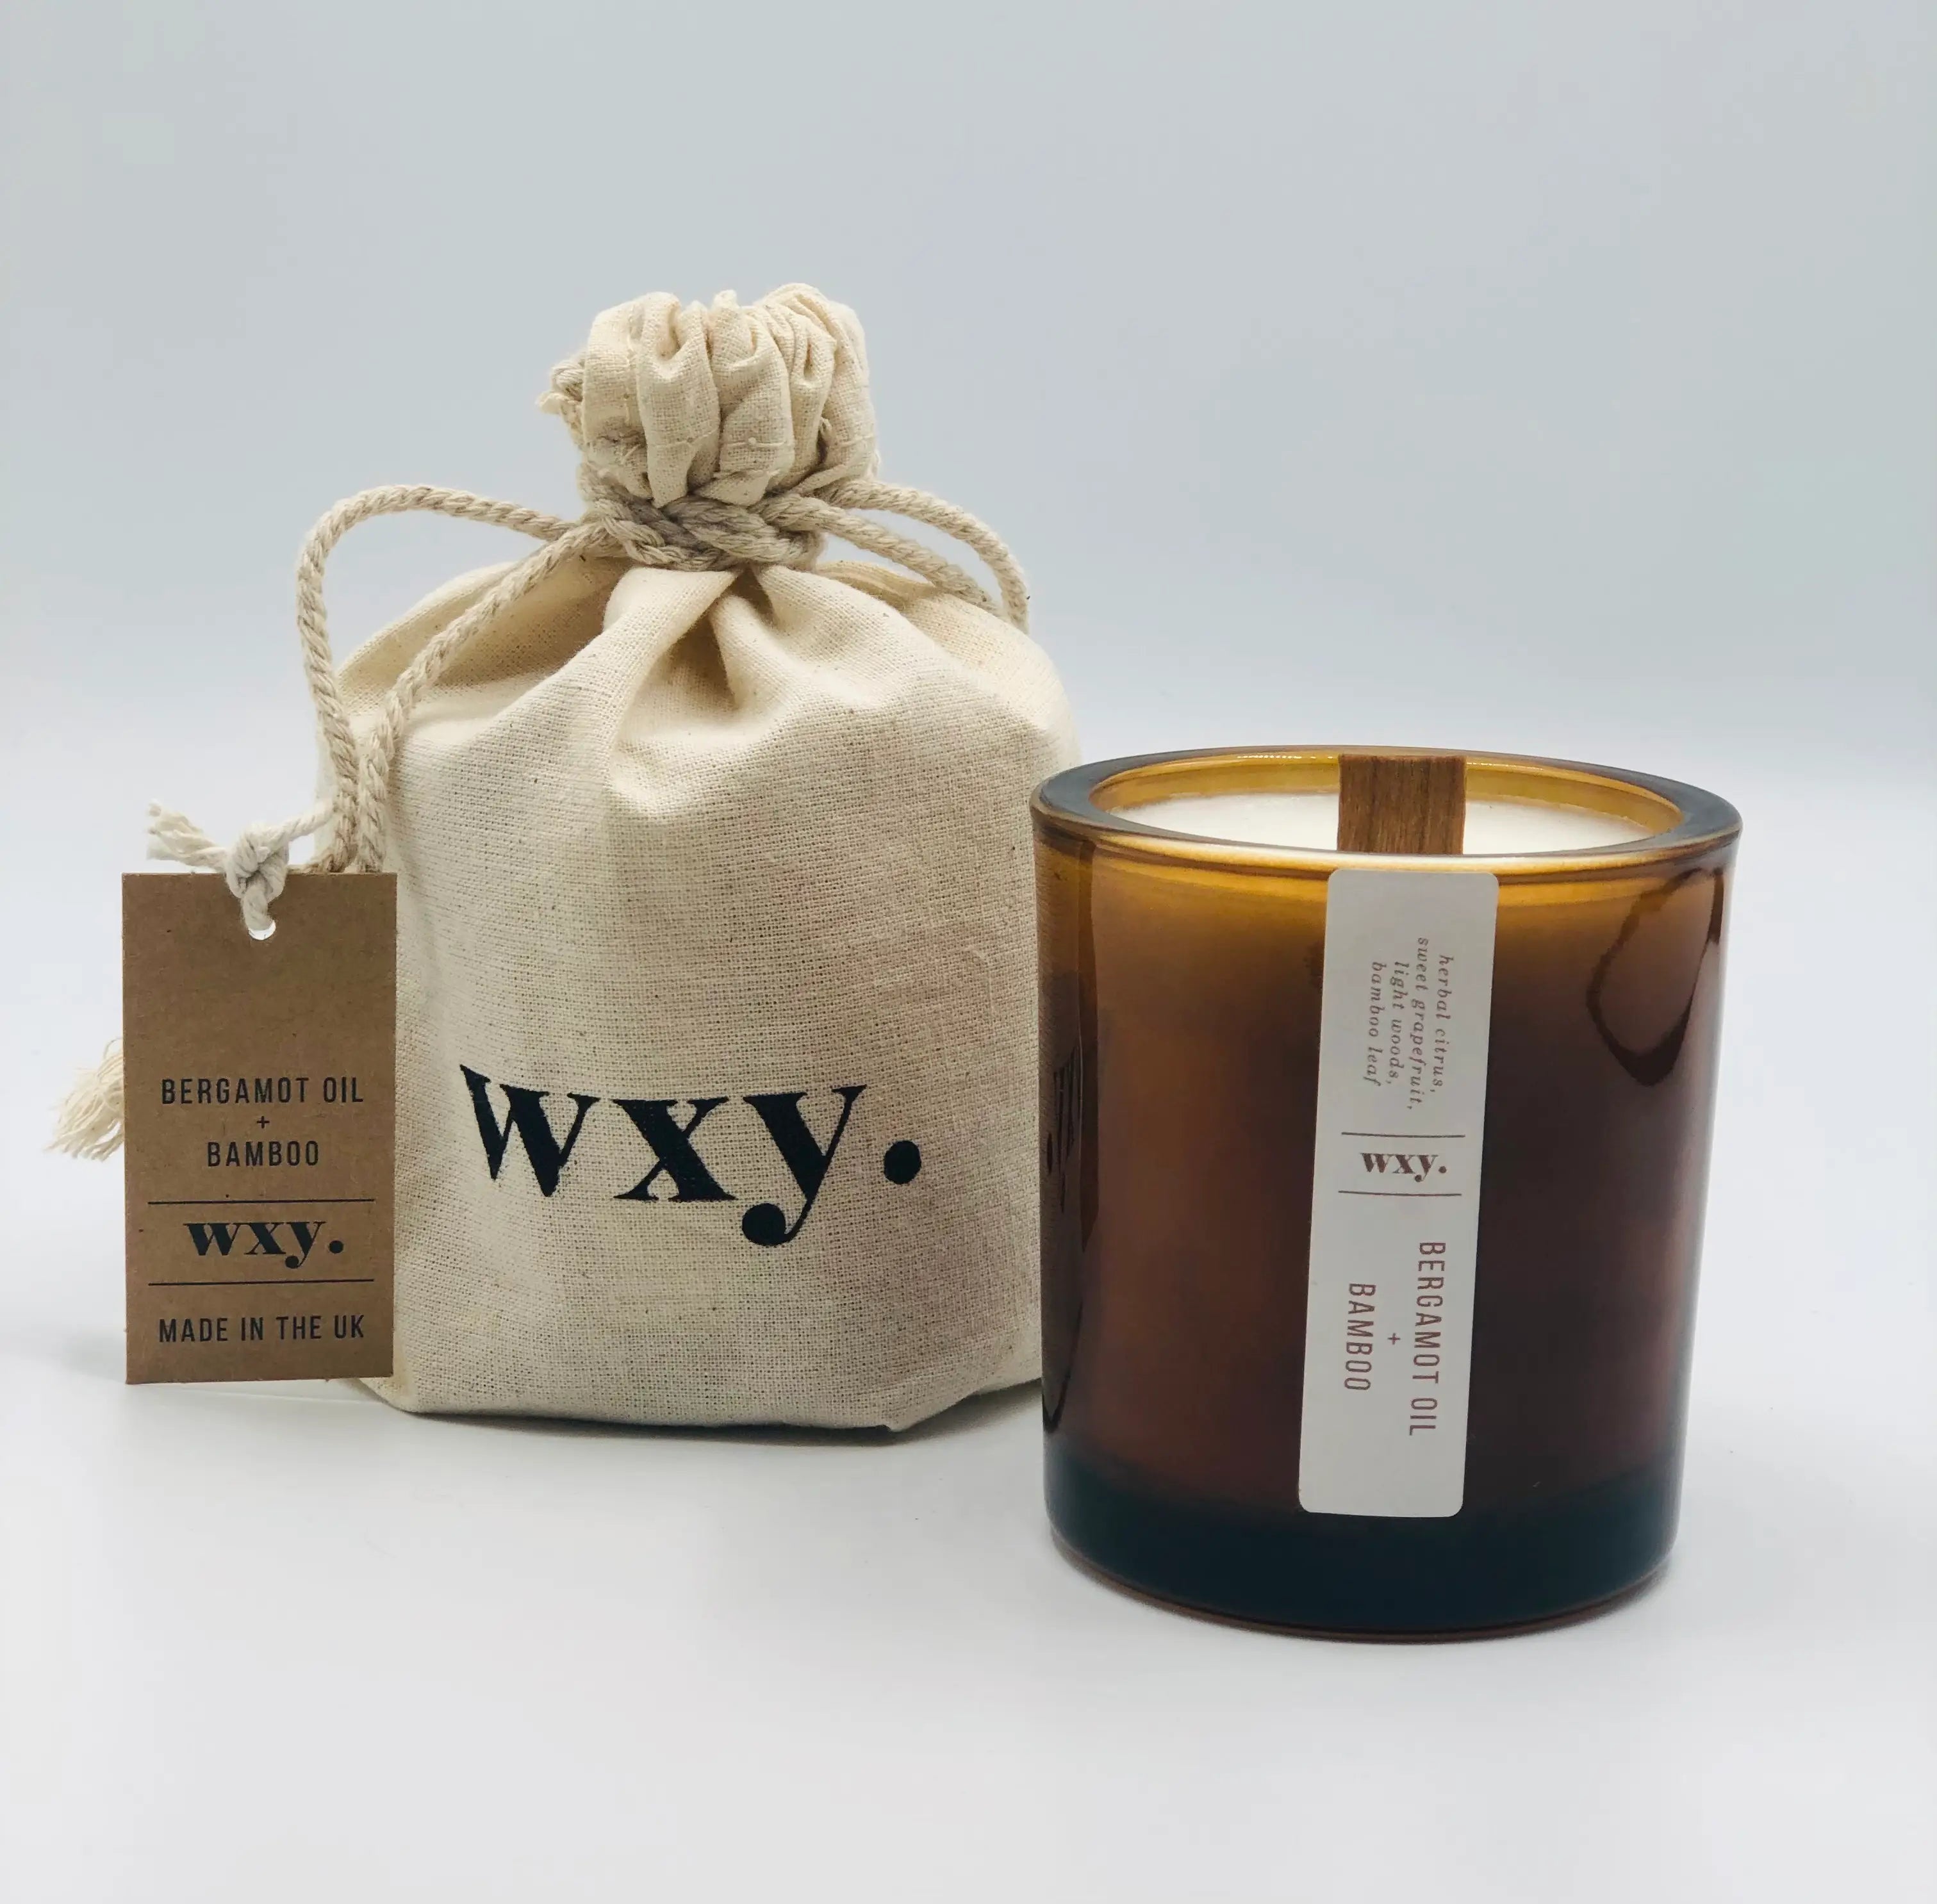 Wxy Amber - Bamboo and Bergamot Oil Candle